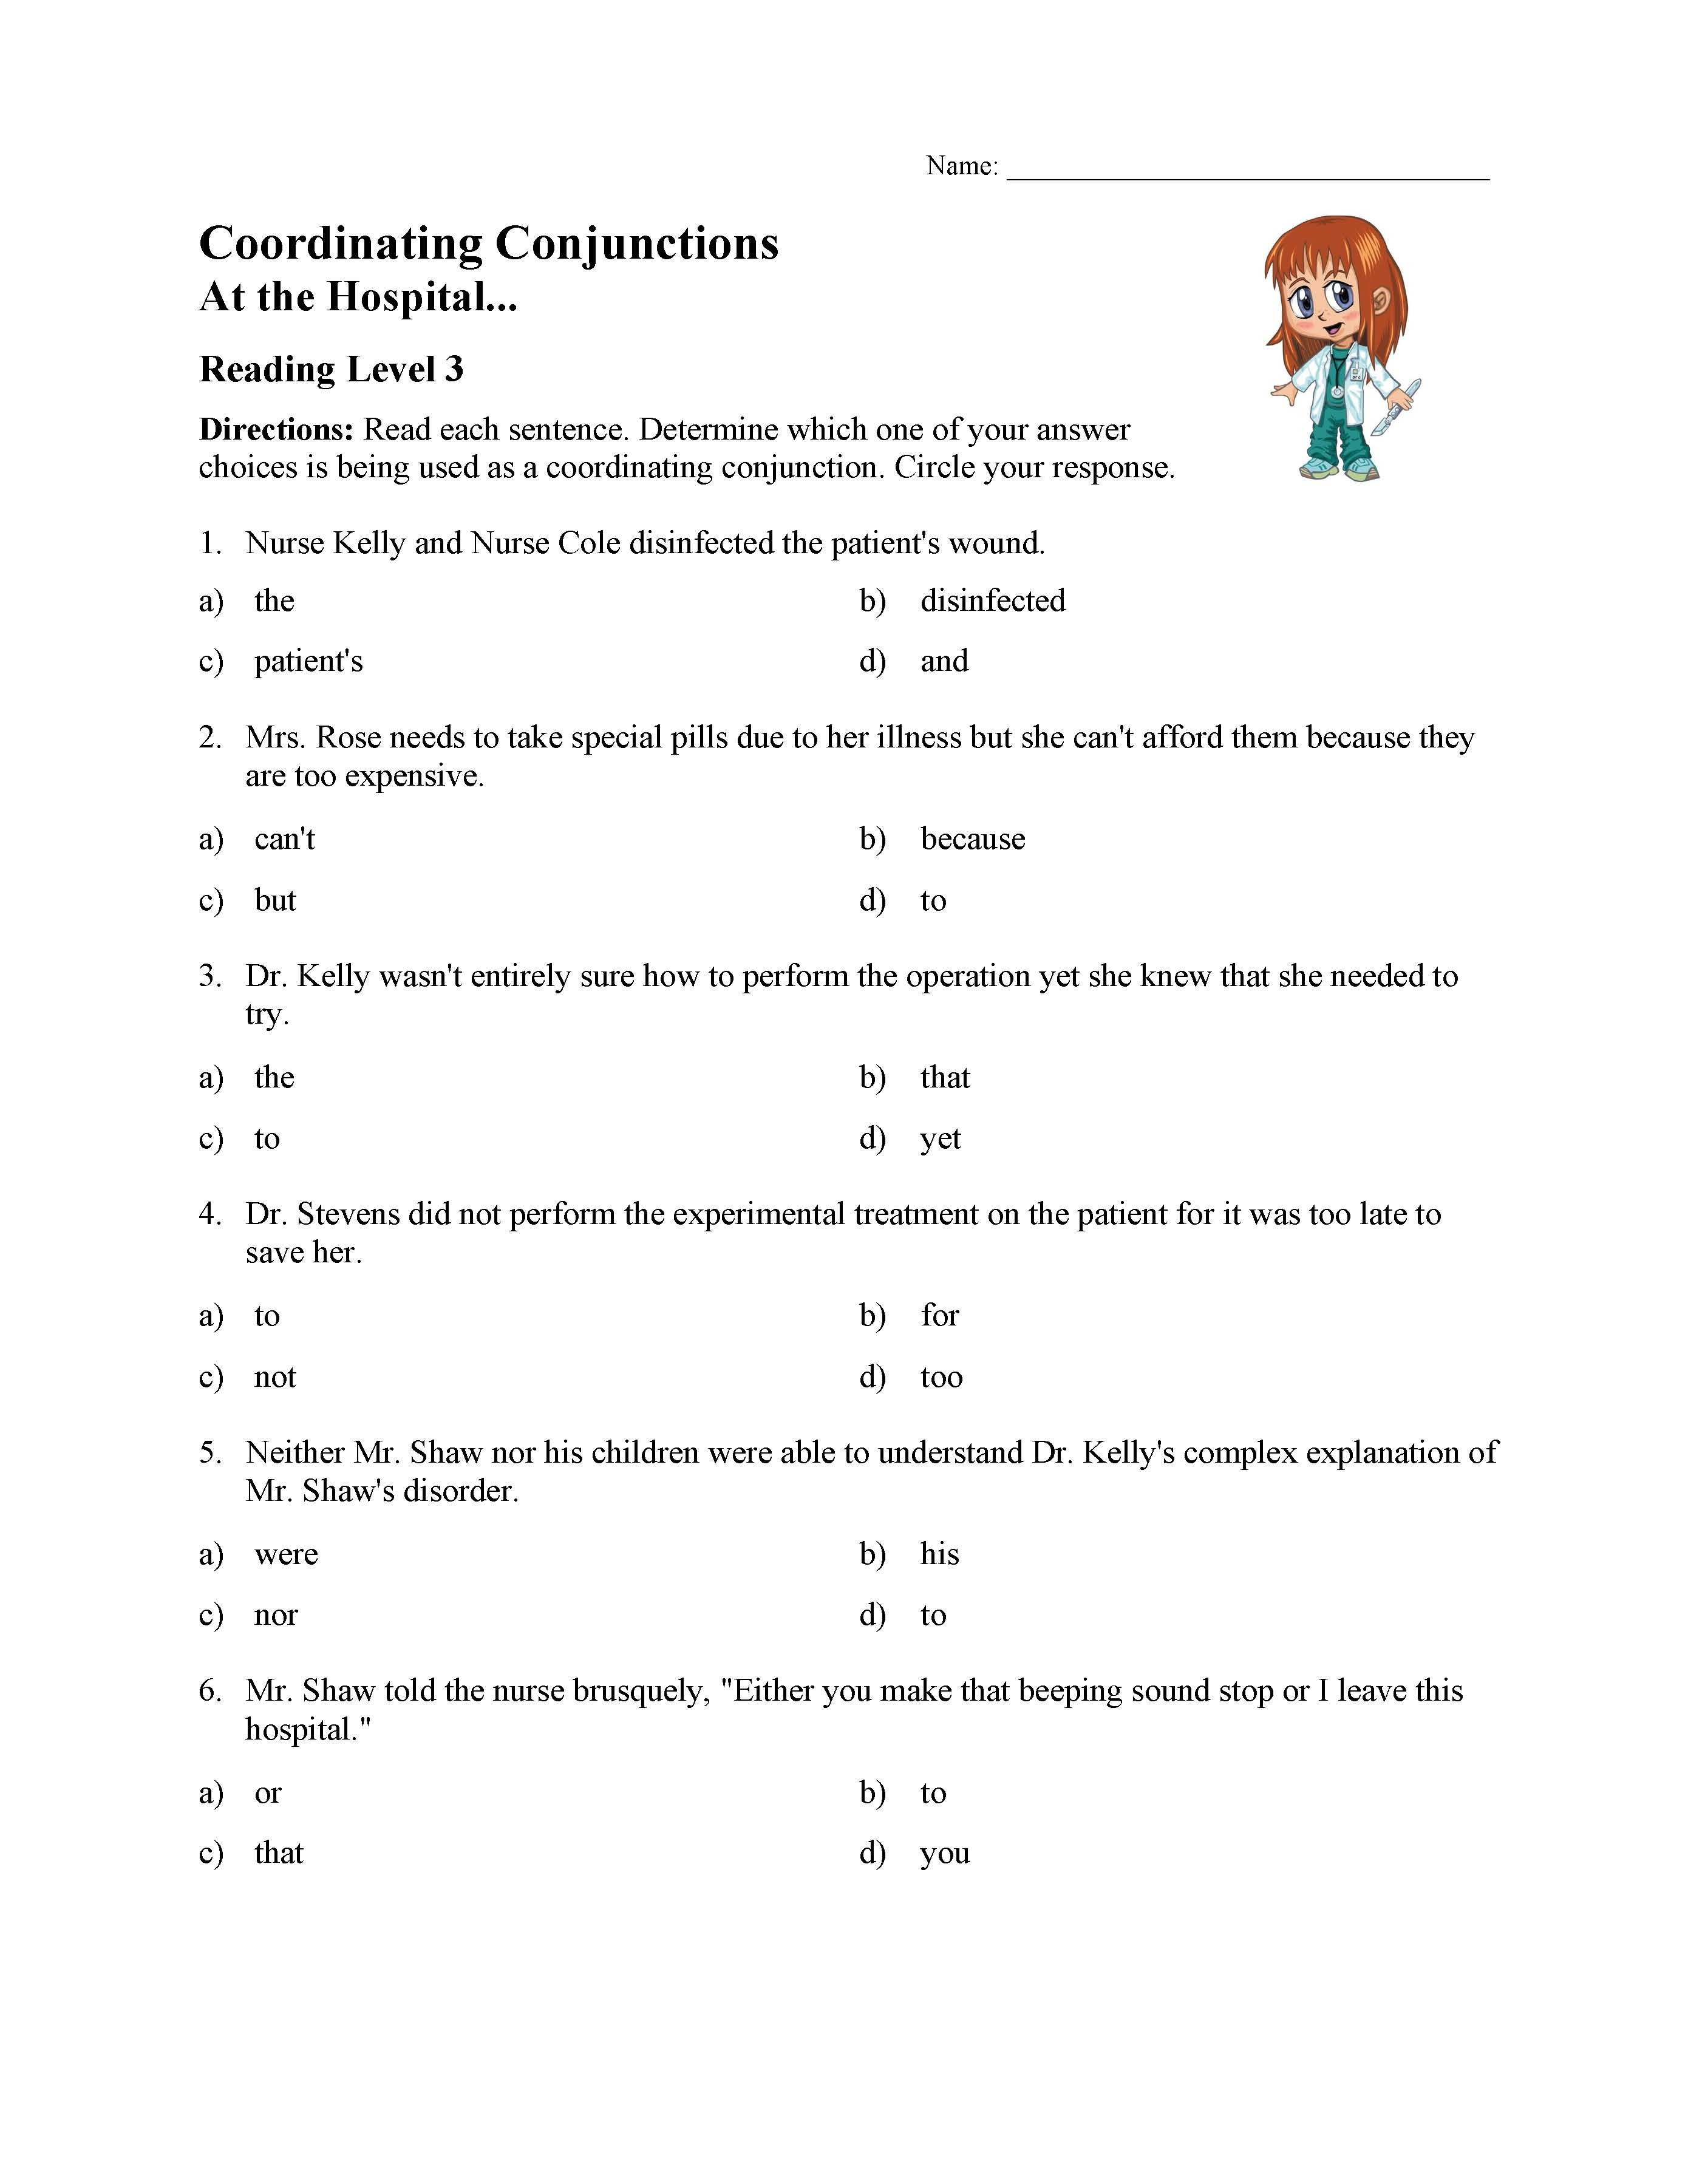 Conjunction Worksheets for Grade 3 Coordinating Conjunctions Worksheet Reading Level 3